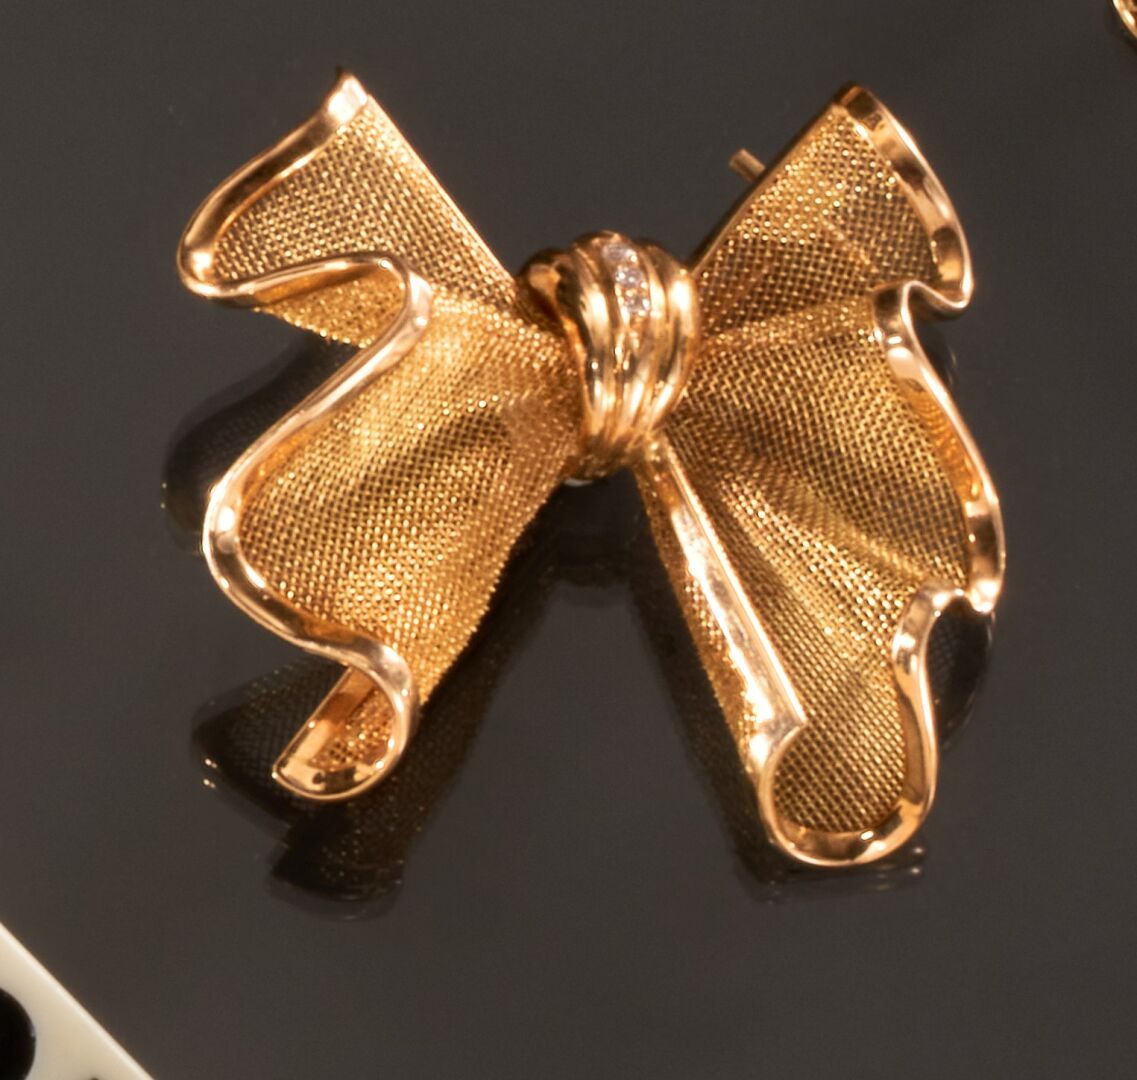 Null 黄金75万分之一的薄纱胸针，中心饰有小圆钻。
(因为太大，所以要重新调整针脚)
长度 : 3,6 cm
总重量 : 7,3 g